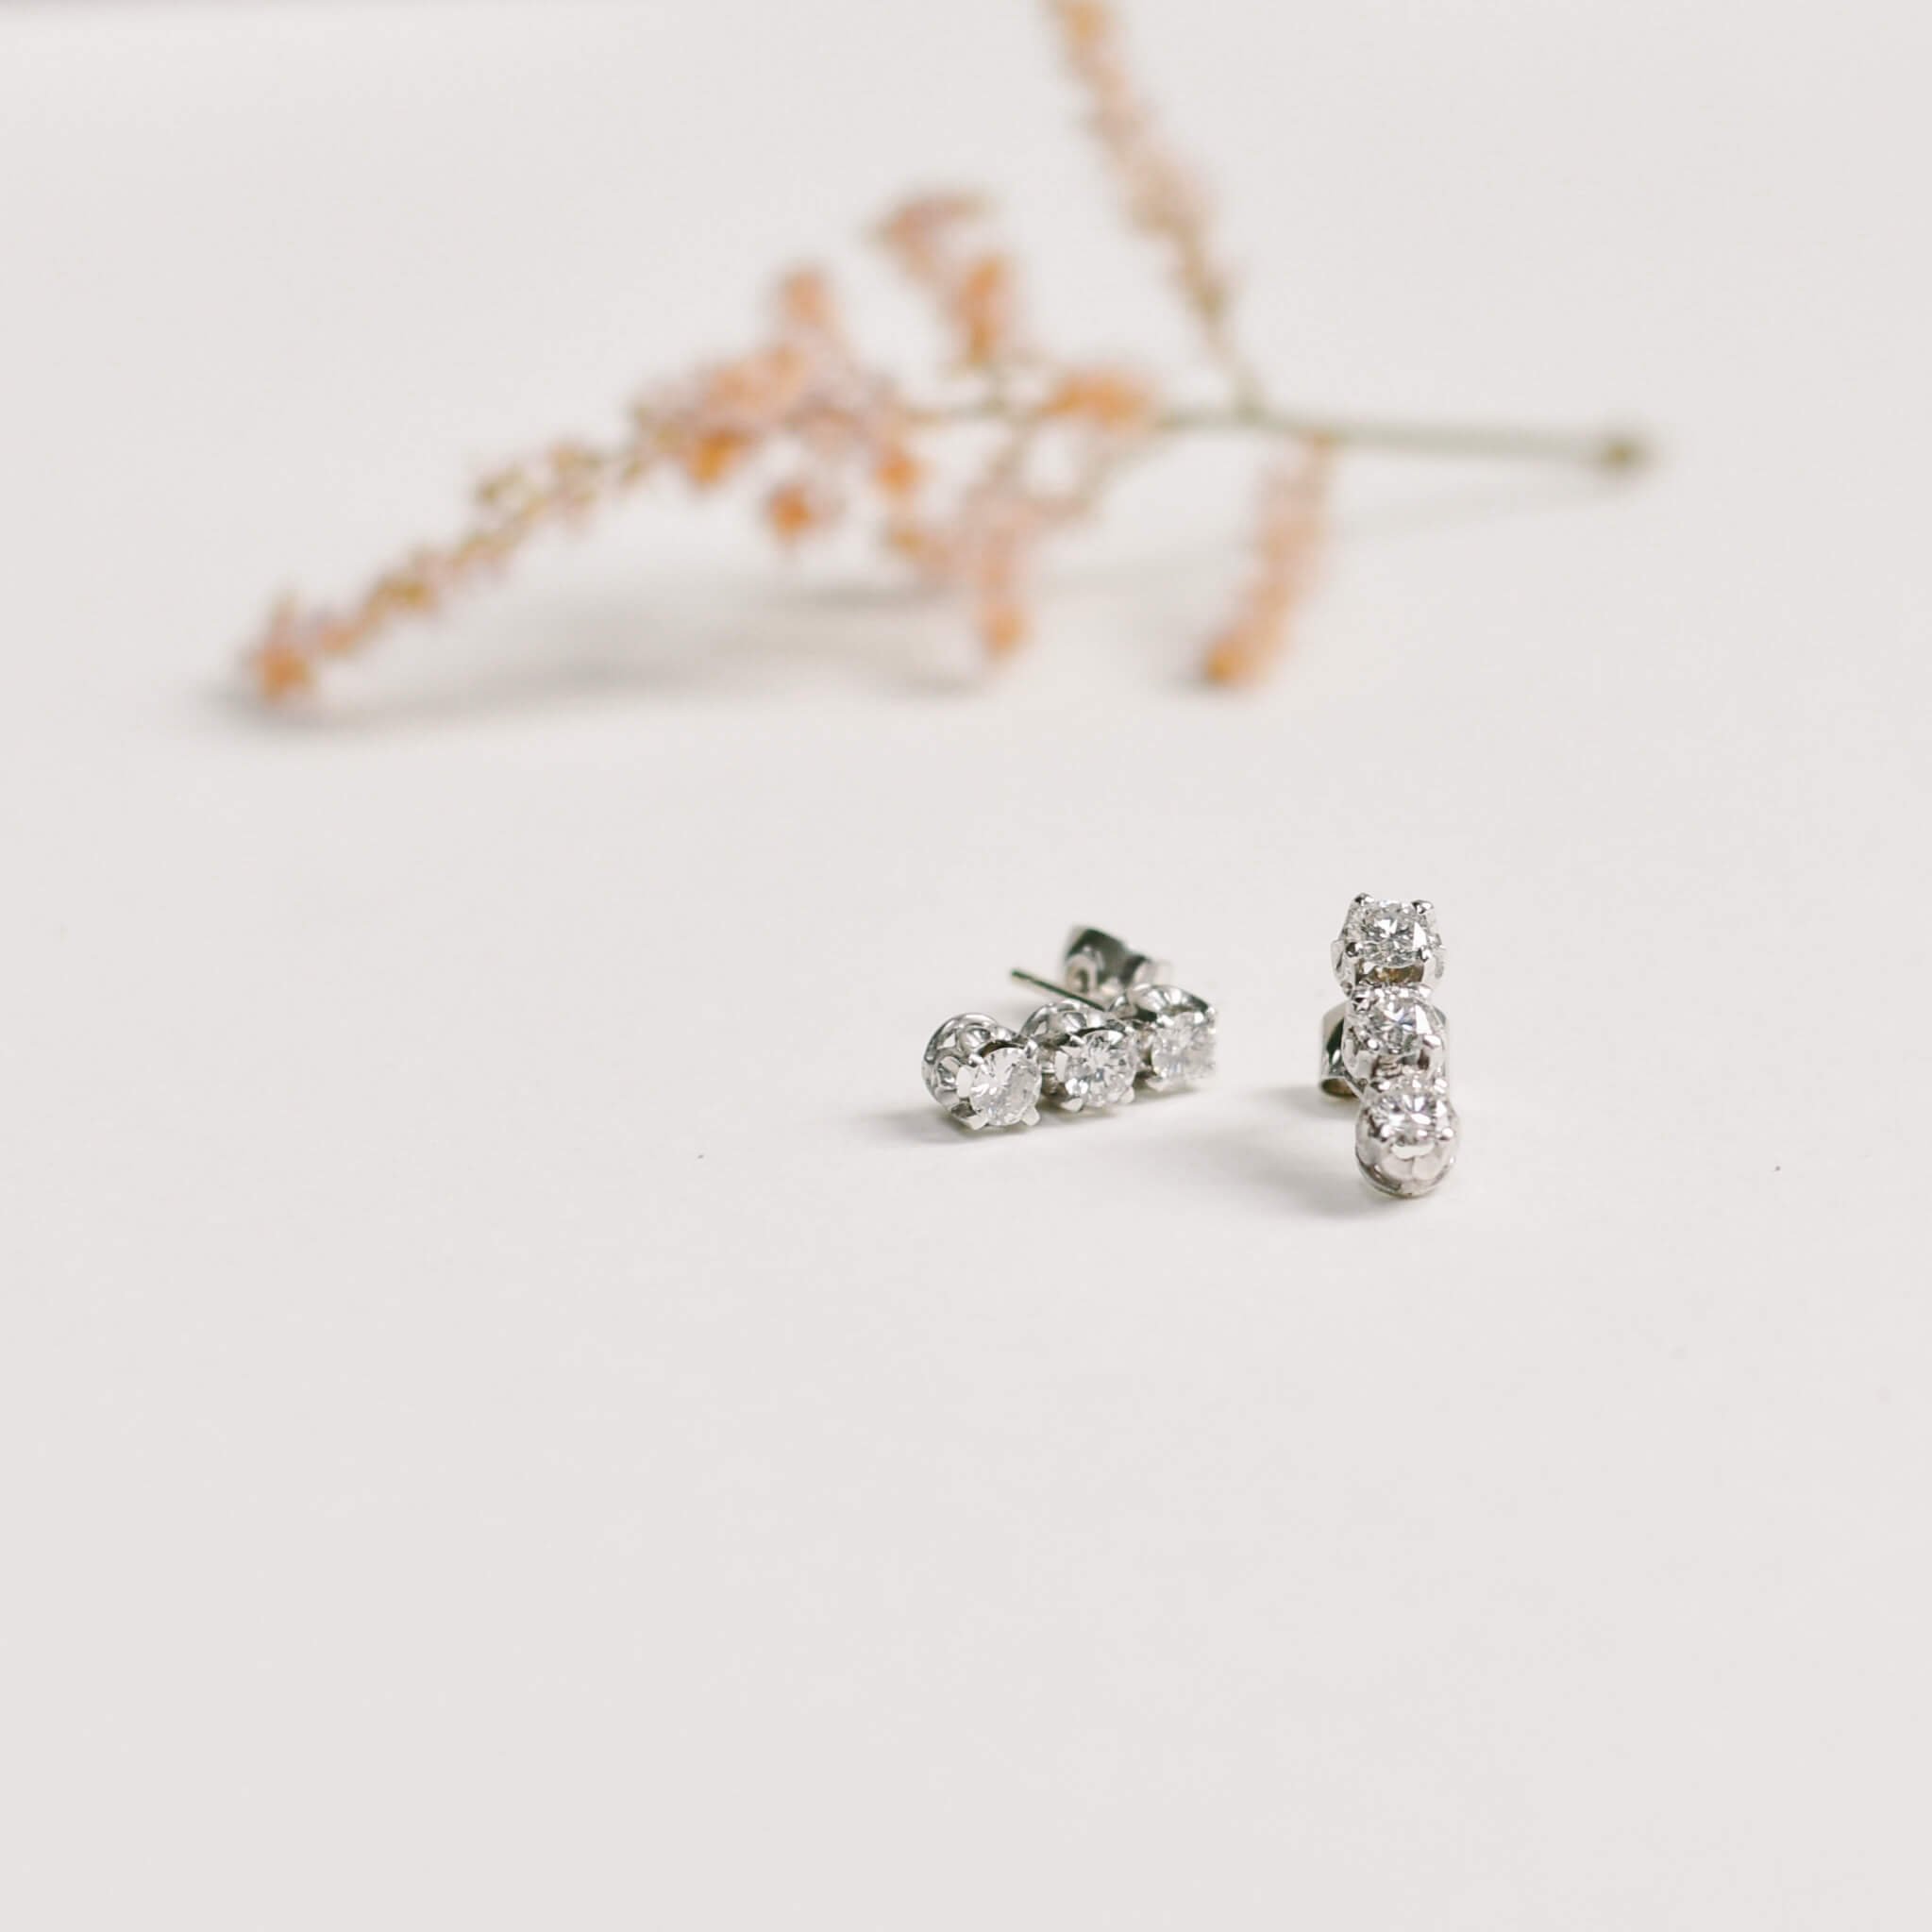 Diamond earrings inherited in need of redesign